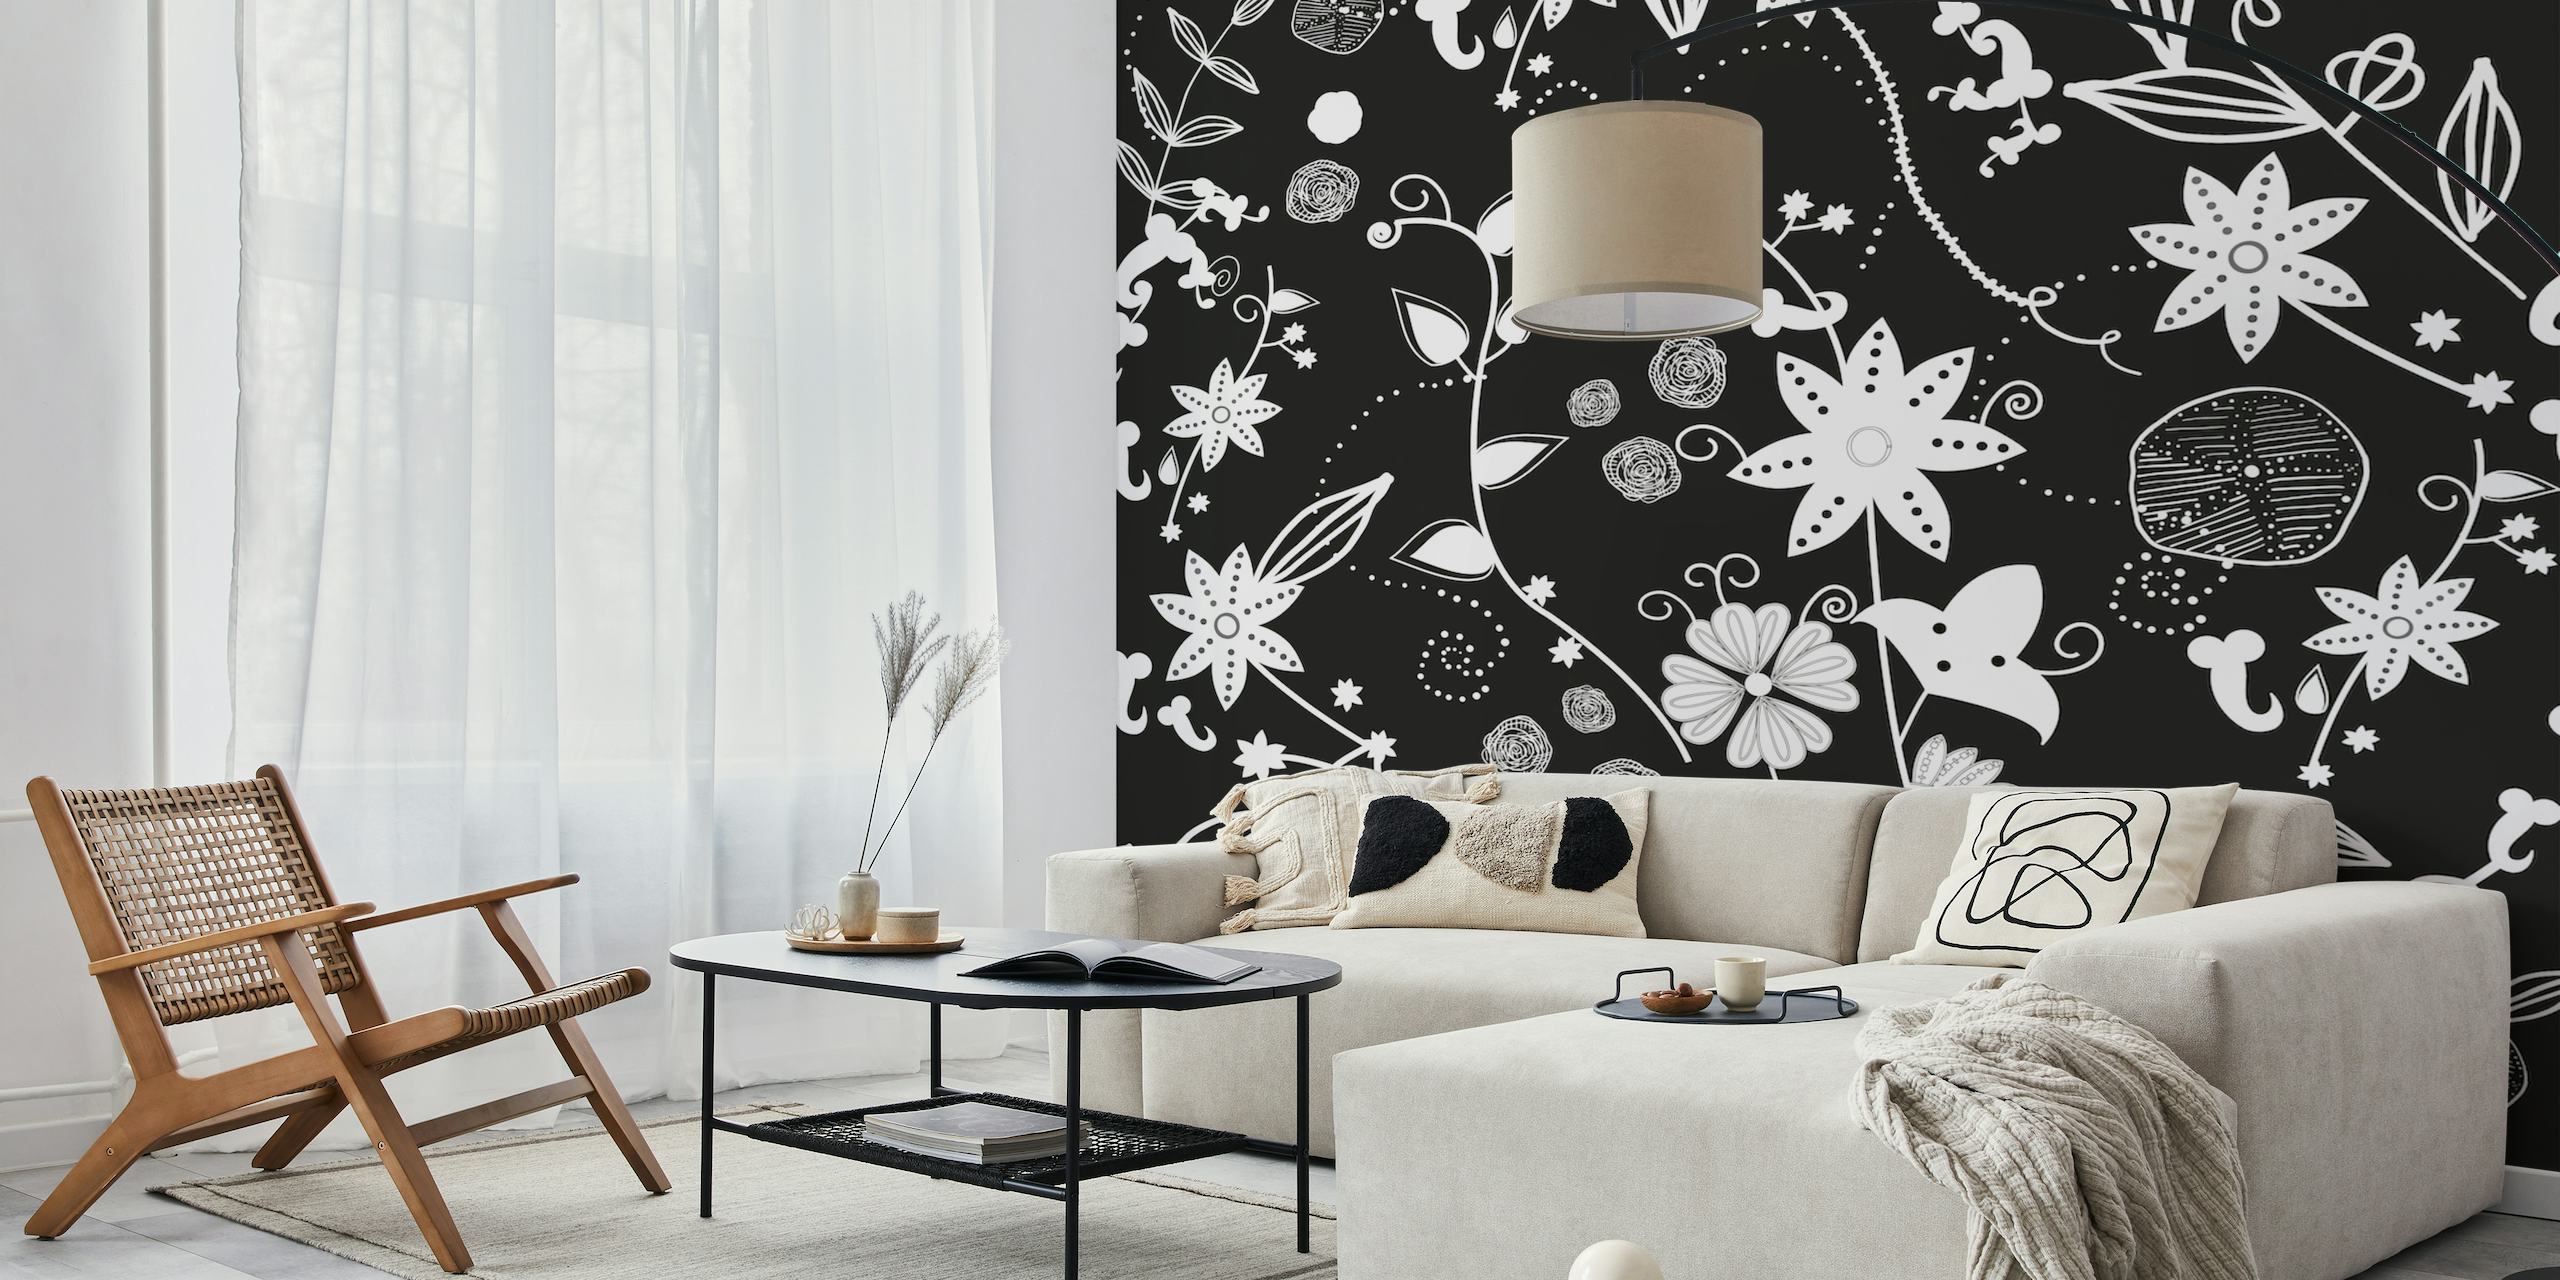 Blomstervægmaleri i sort og hvid boho-stil